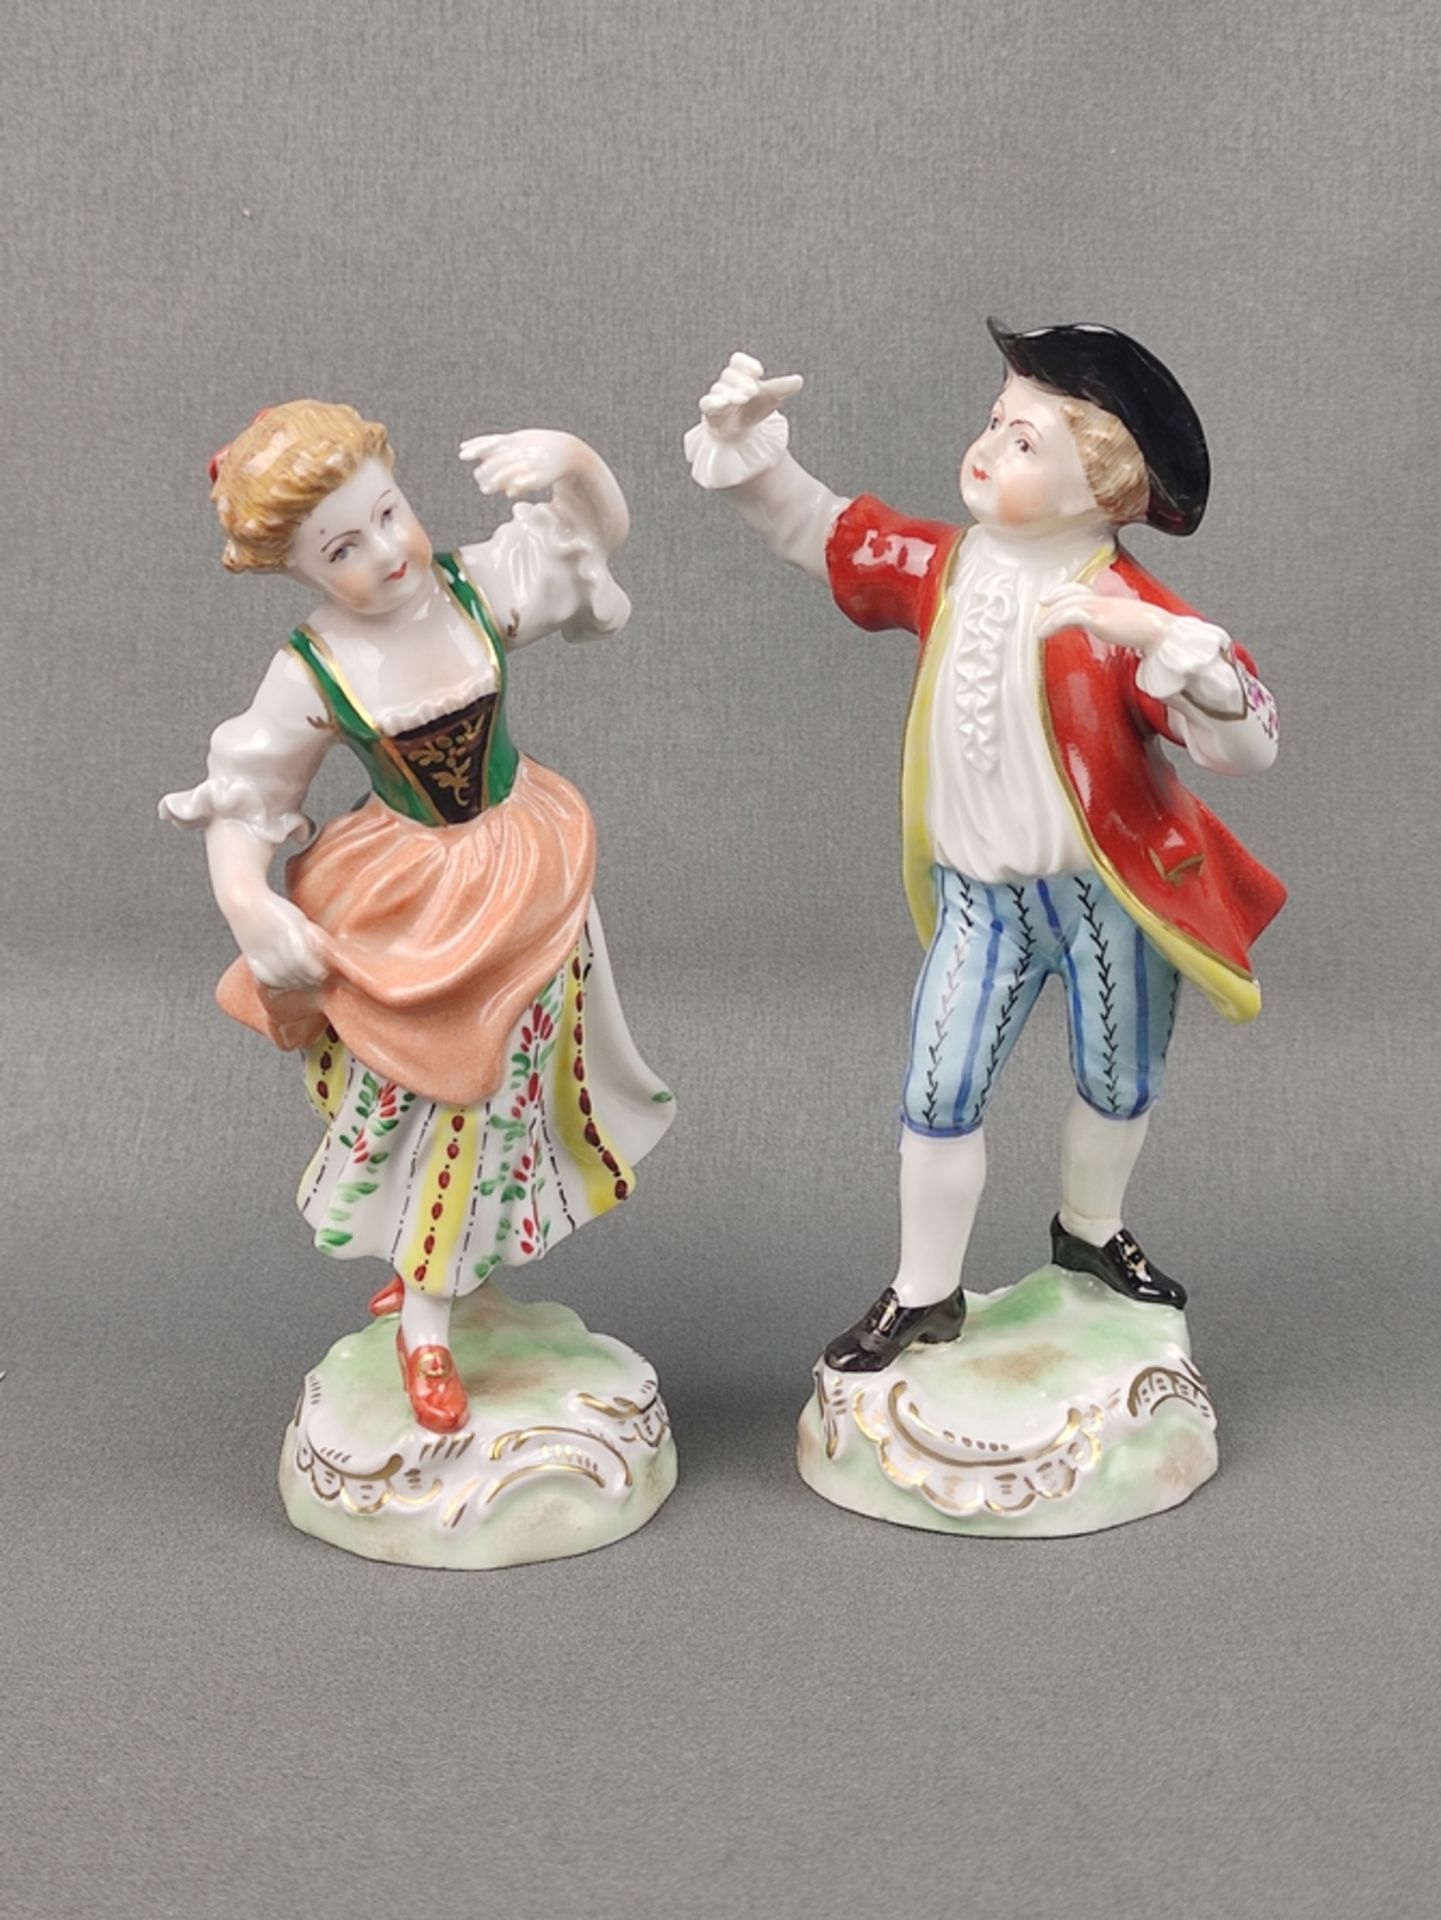 Pair of porcelain figures "Farmer's Dance", Dresden porcelain, woman and man in peasant dress in da